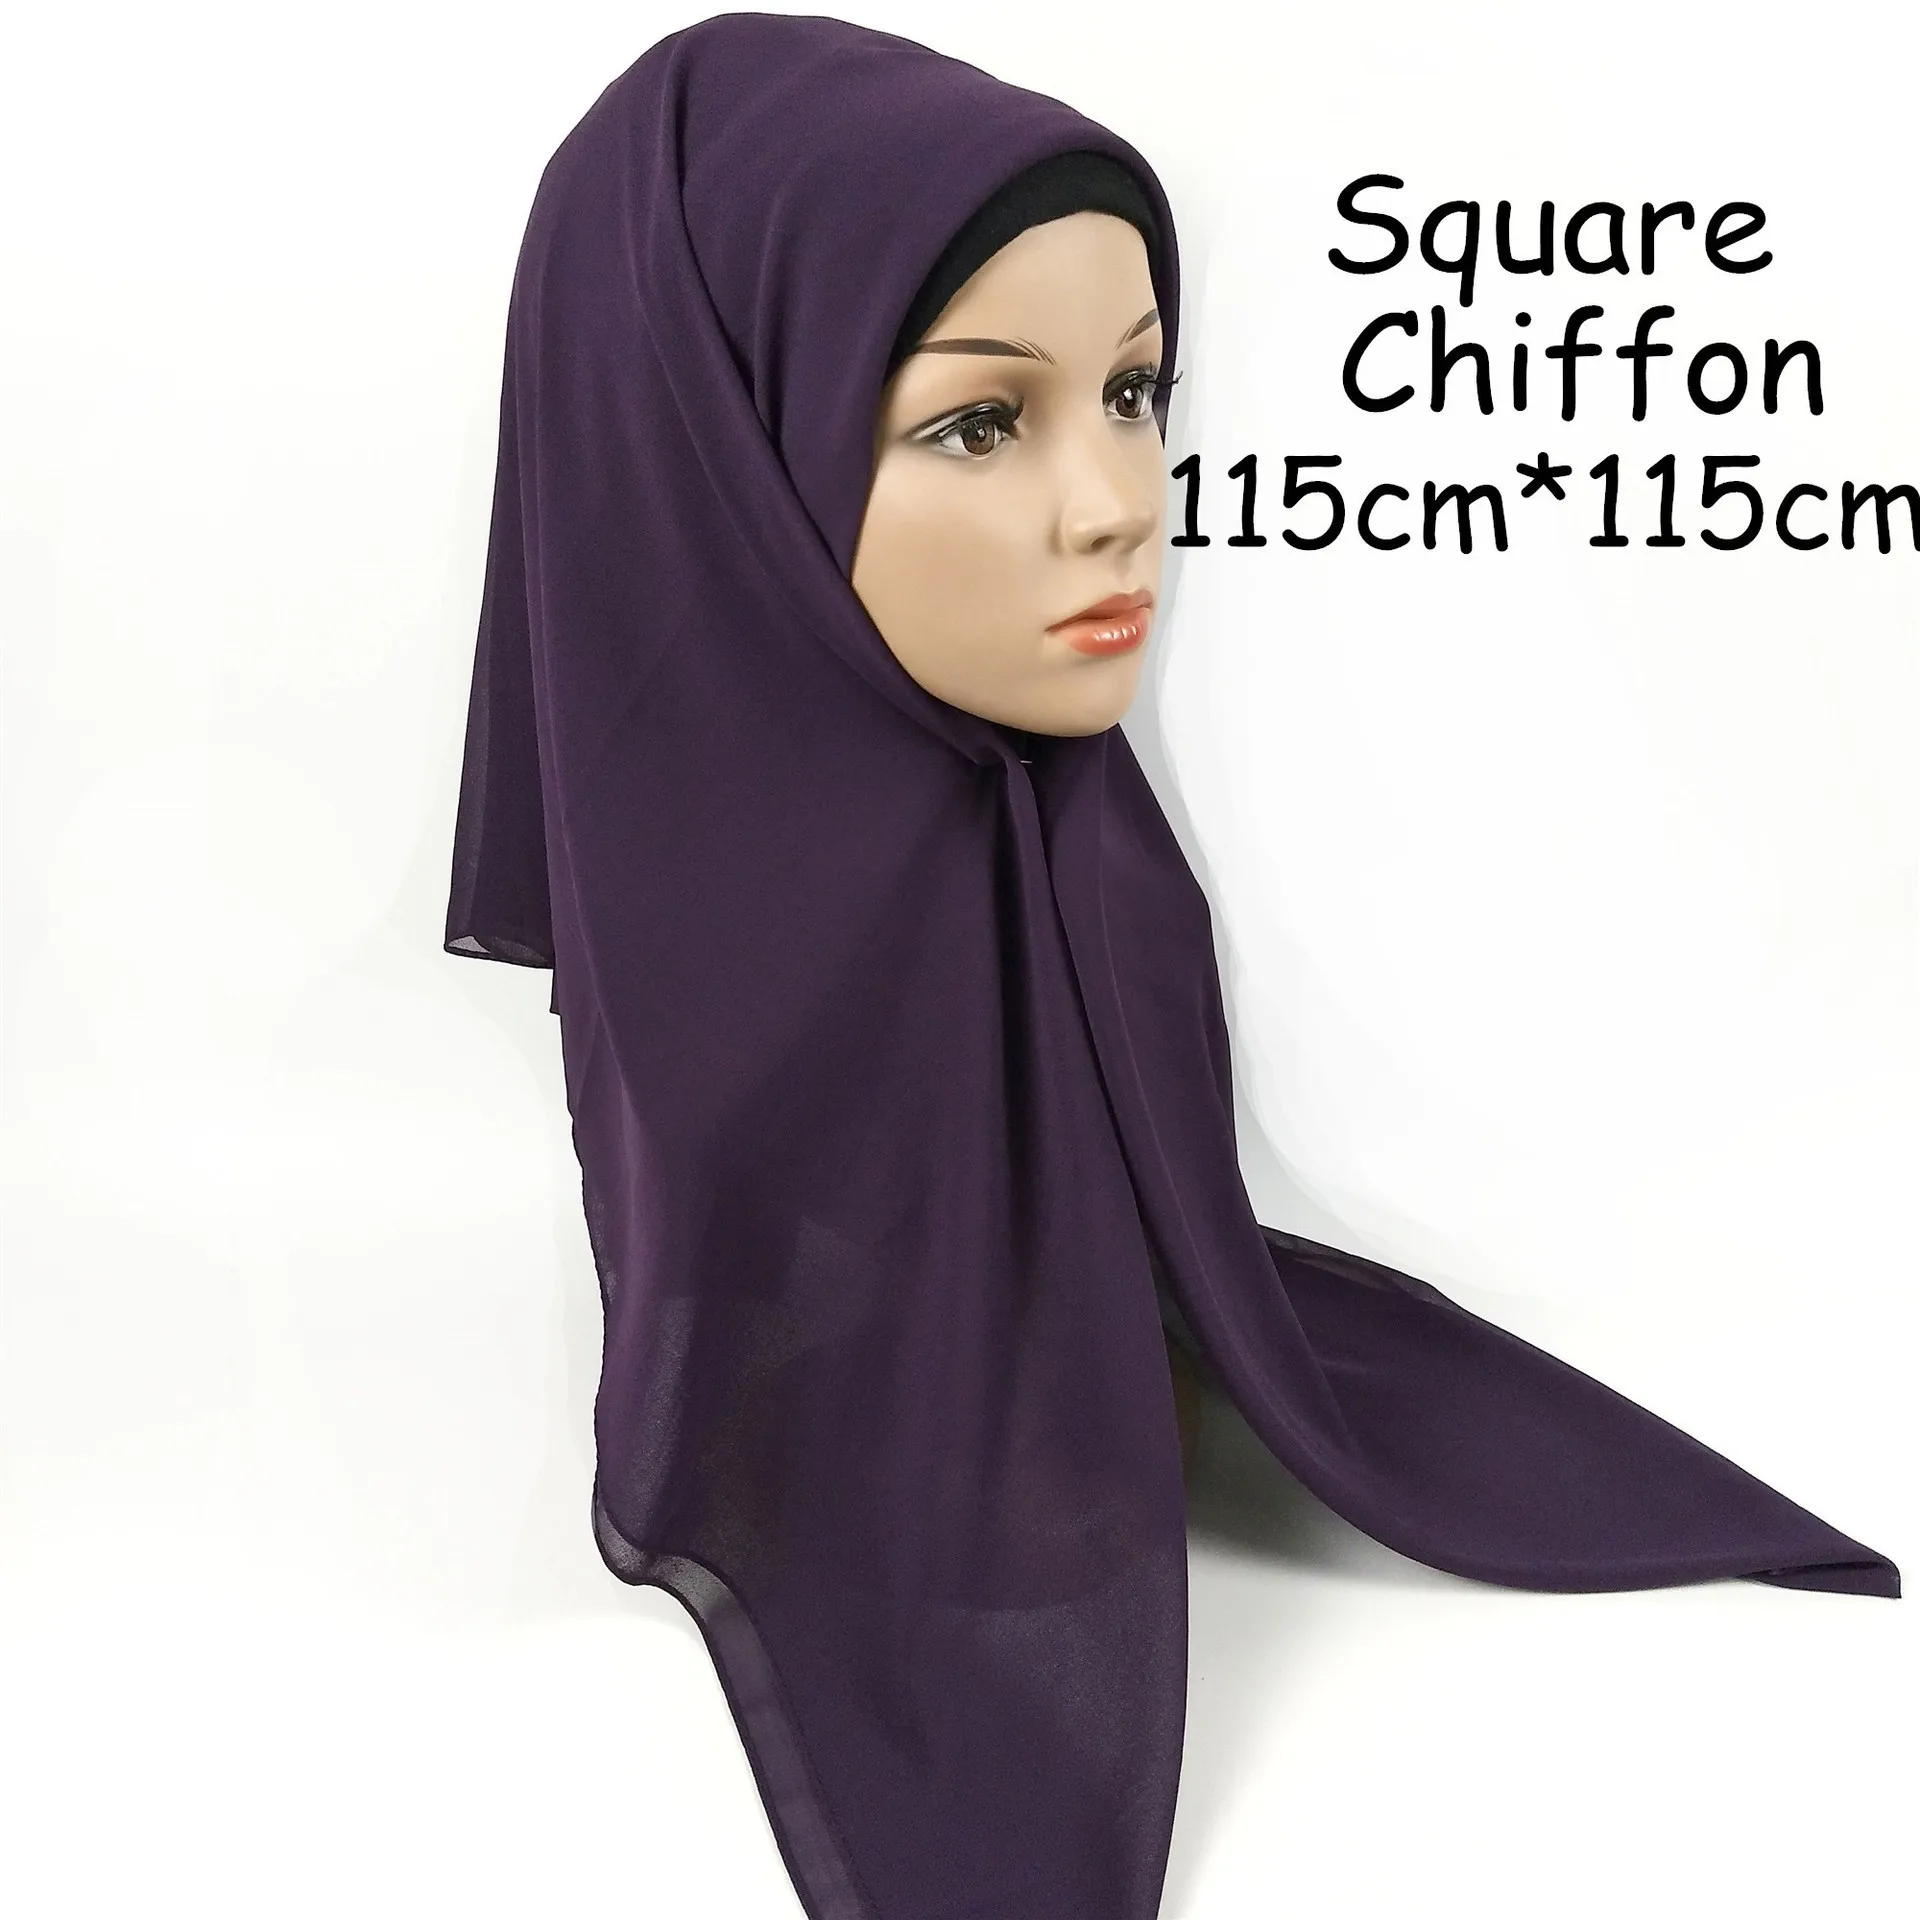 Plain Square Bubble Chiffon Instant Hijab Women's Head Scarf Shawl Muslim Popular Kerchief Solid Color Pashmina Stole 115*115cm